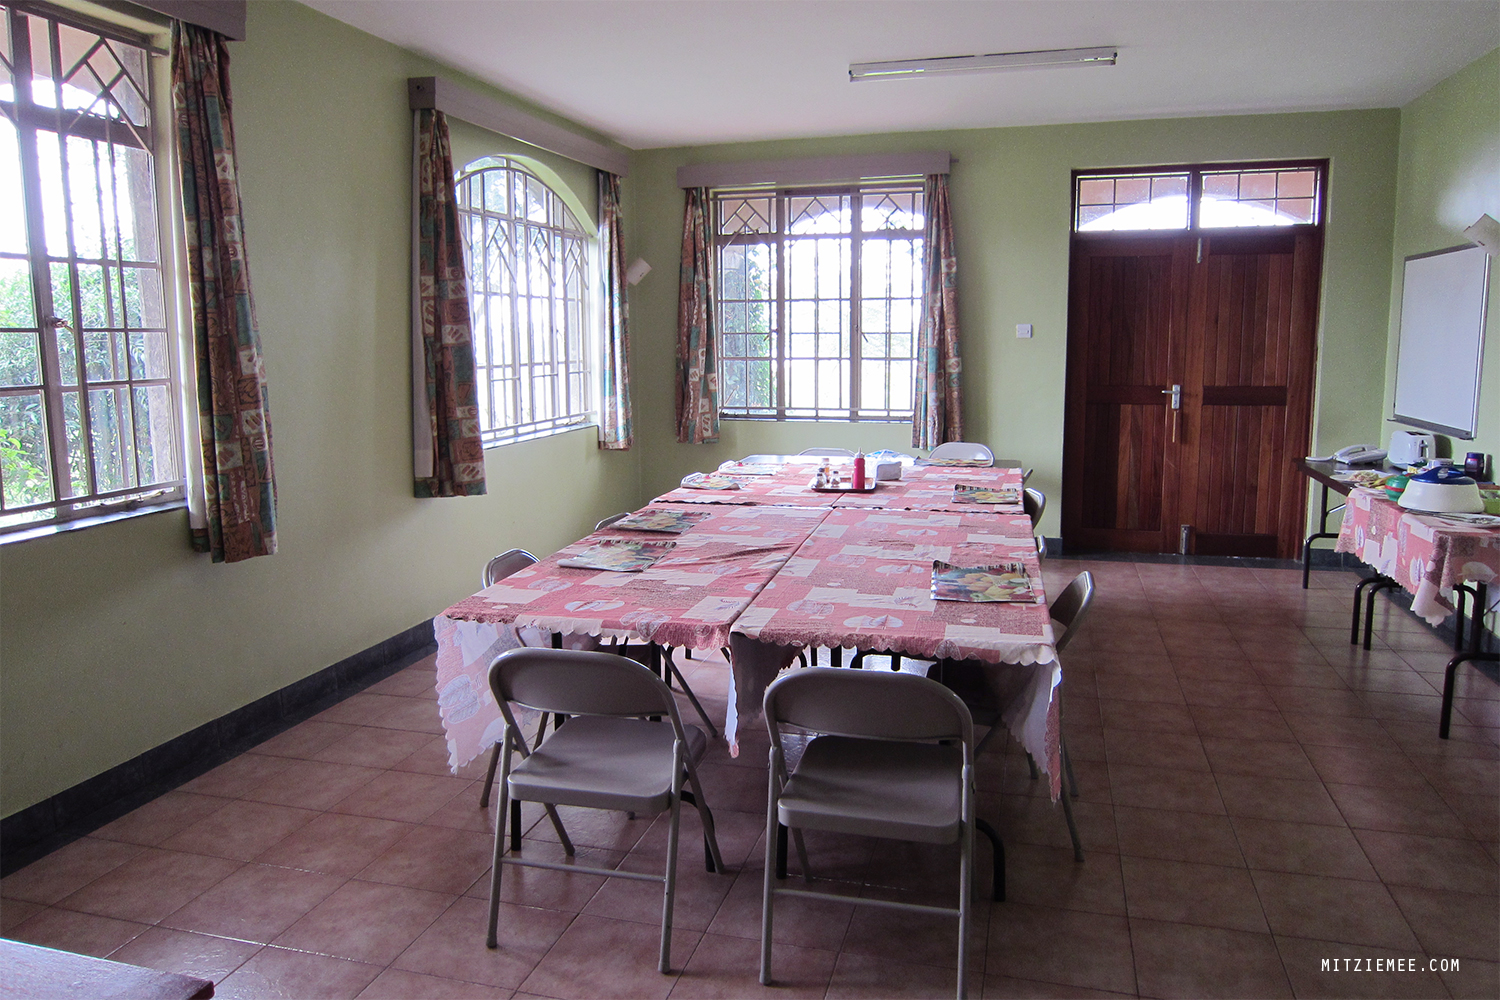 The dining room, Kenya